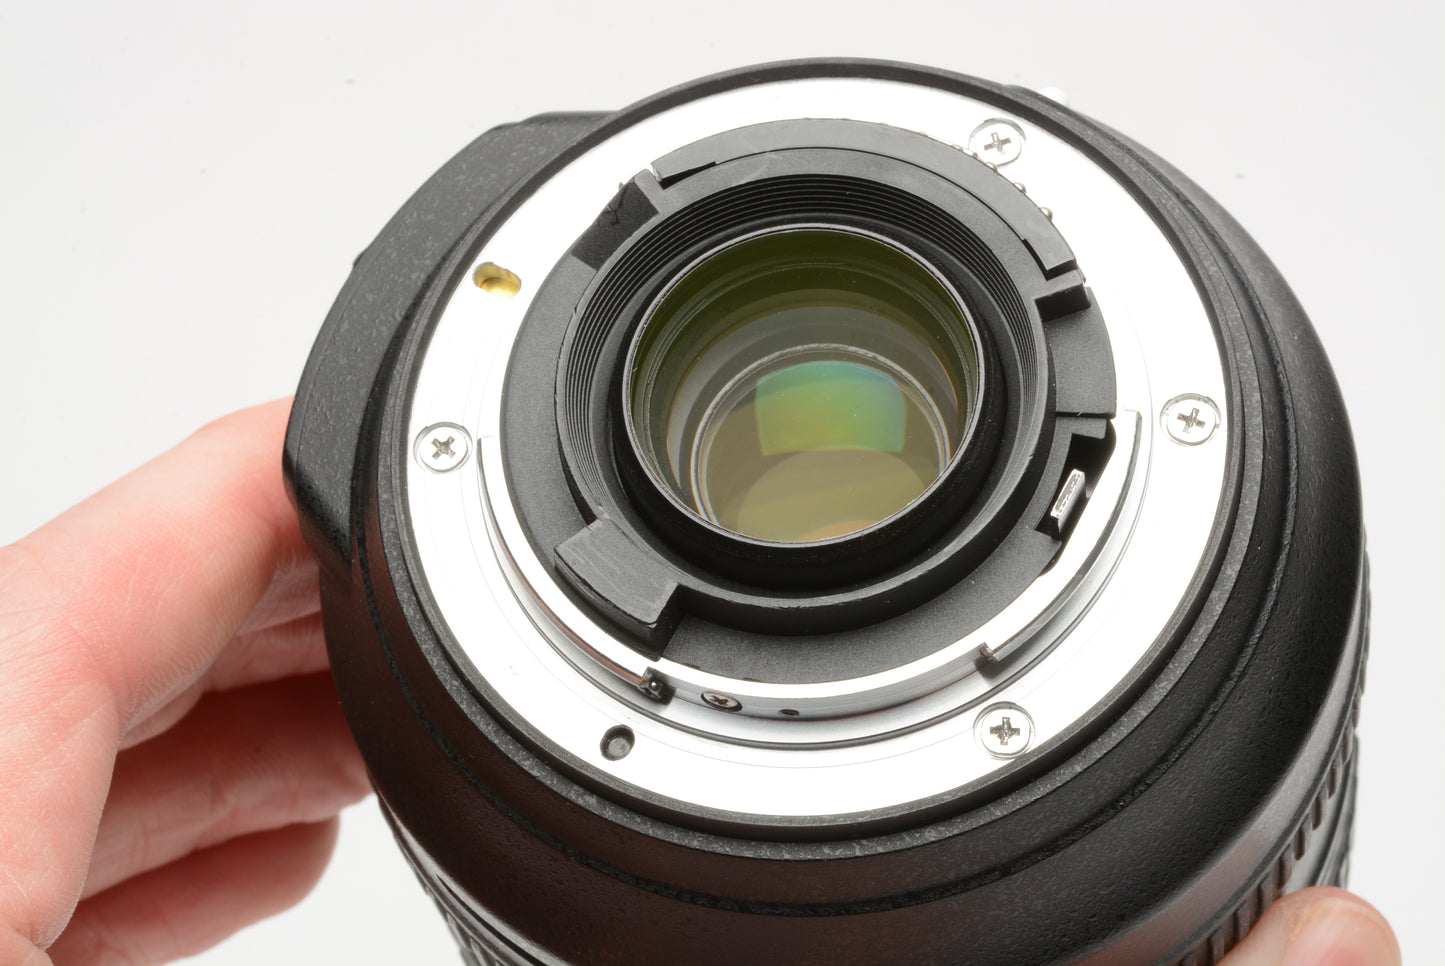 Nikon Nikkor AFS 24-85mm f3.5-4.5G ED VR zoom lens, caps, HGX UV filter, clean